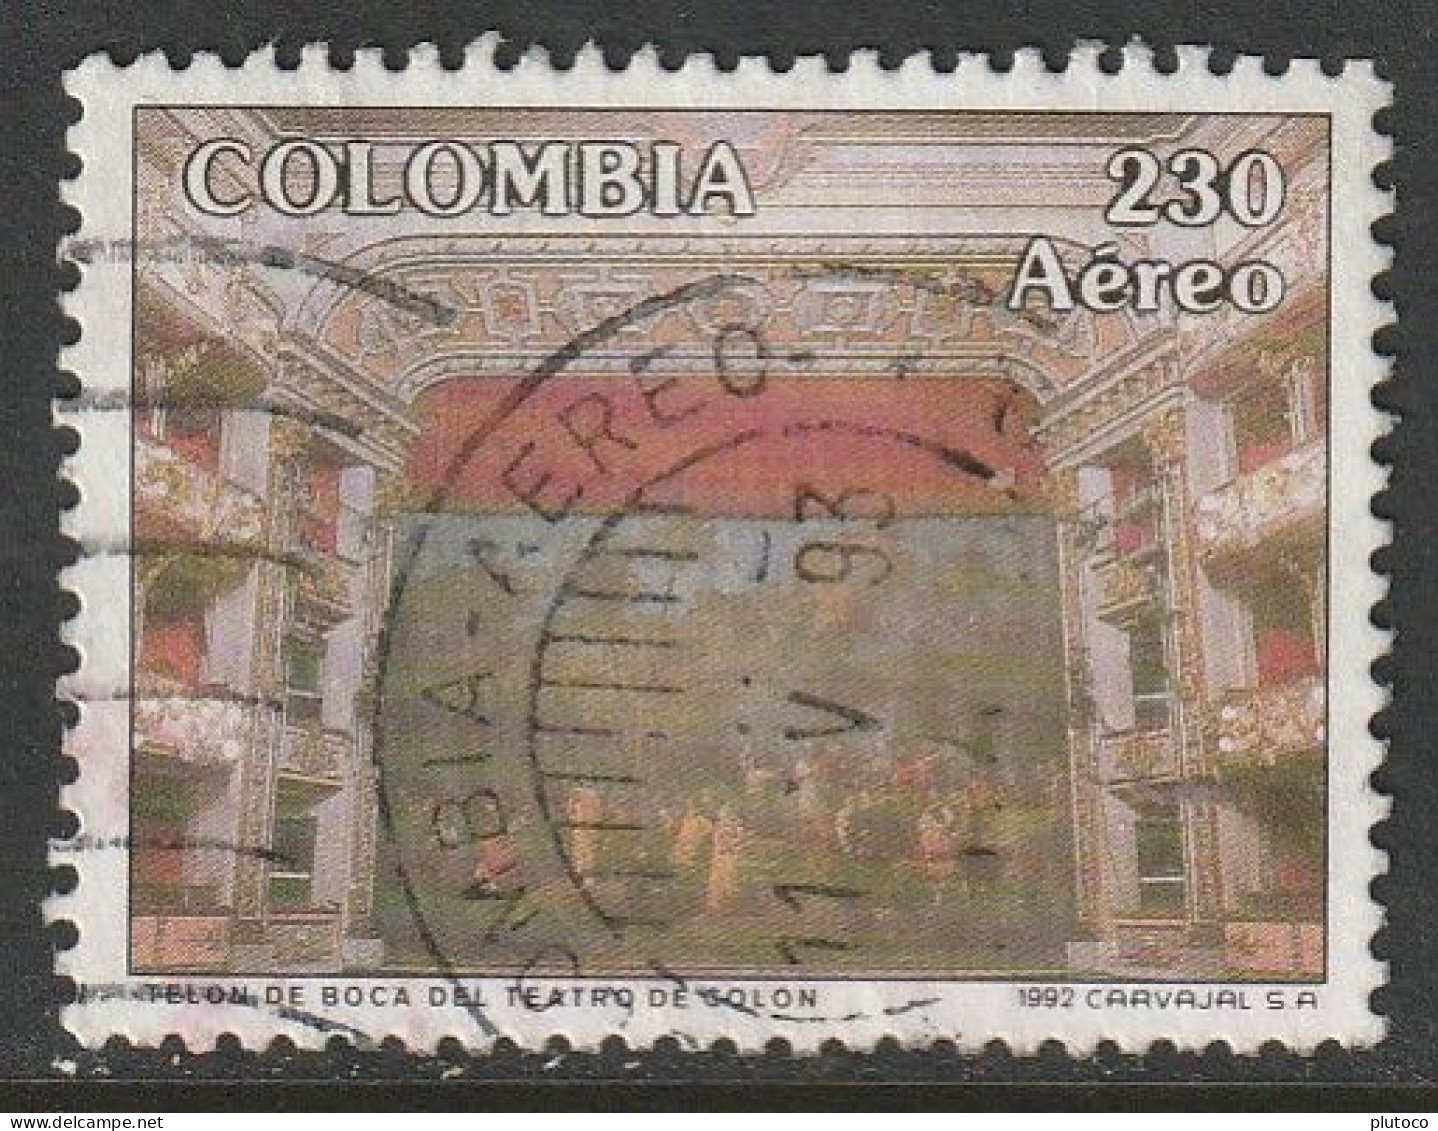 COLOMBIA, USED STAMP, OBLITERÉ, SELLO USADO - Colombia